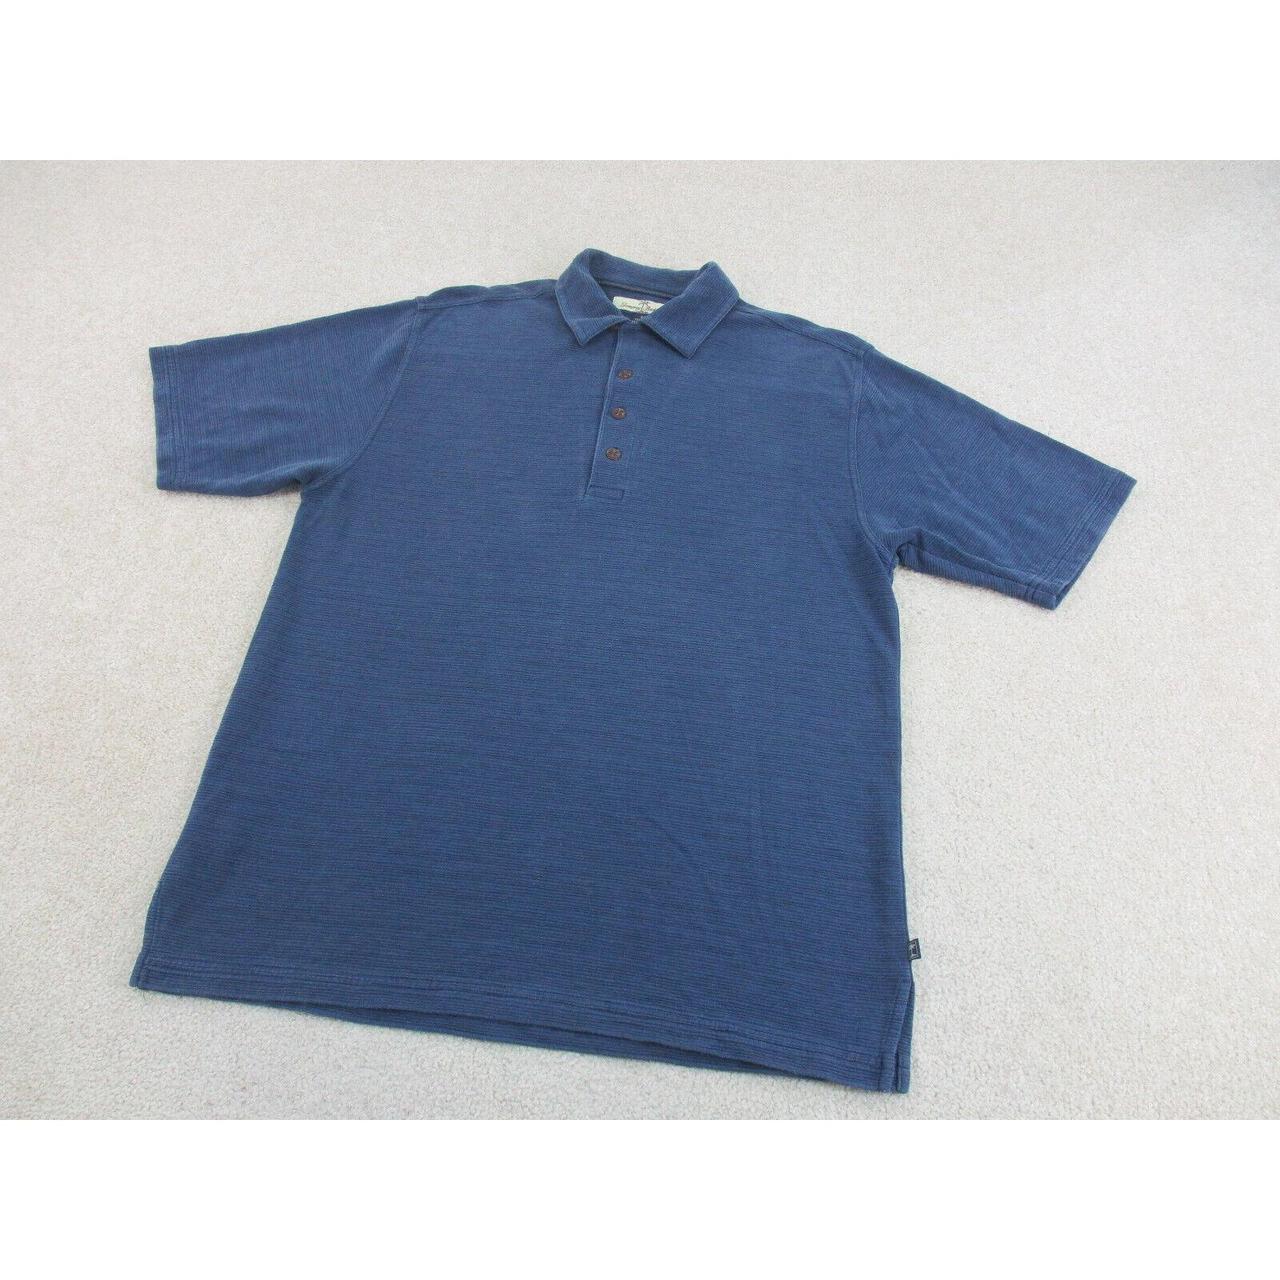 Product Image 2 - Tommy Bahama Polo Shirt Adult